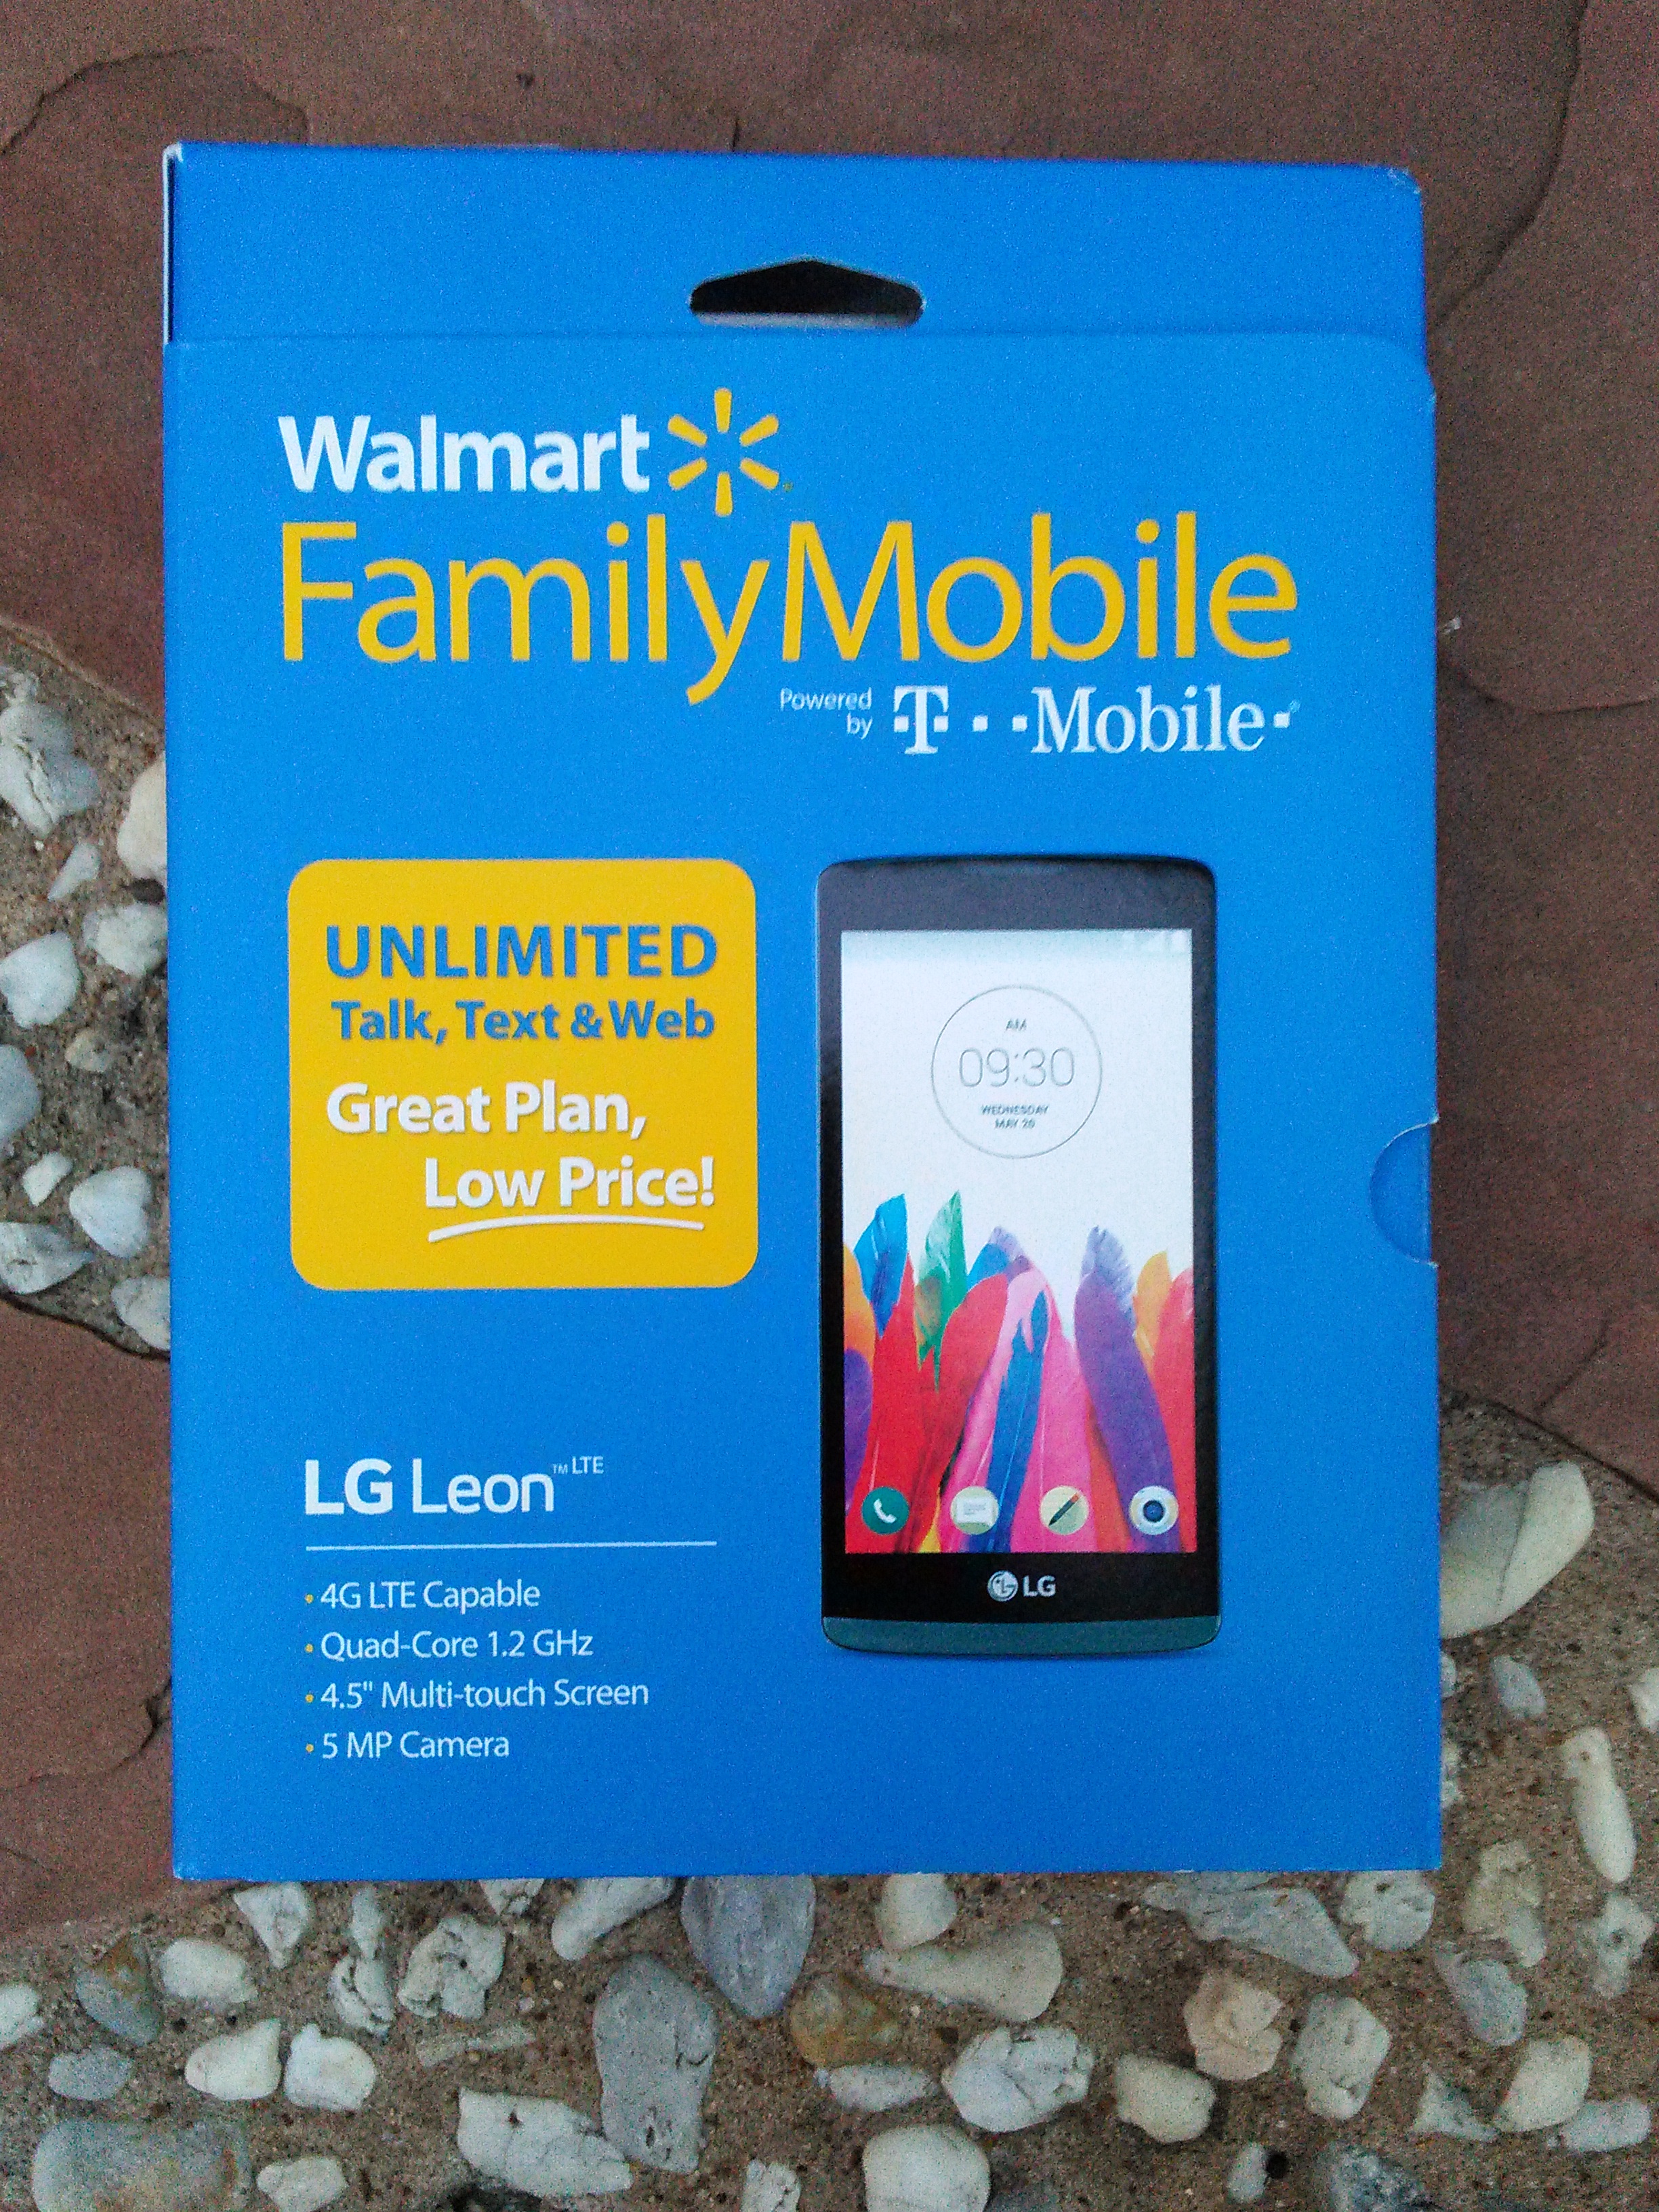 LG Leon Walmart Family Mobile